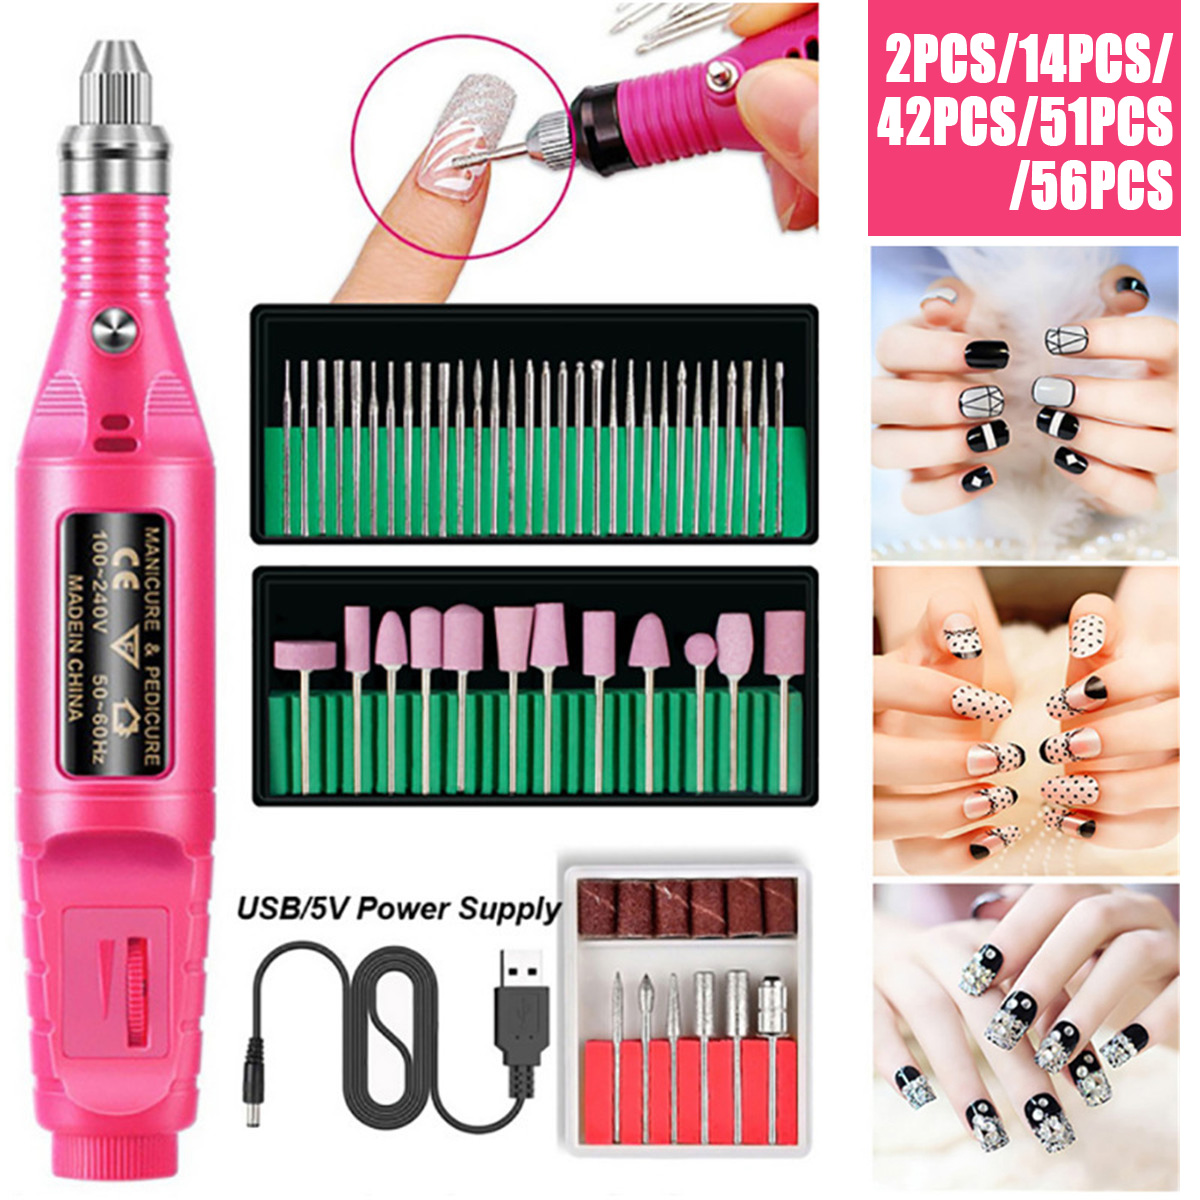 214425156pcs-Electric-Nail-File-Art-Drill-Pen-Kit-Professional-Pedicure-Manicure-Polisher-Tool-1753881-2